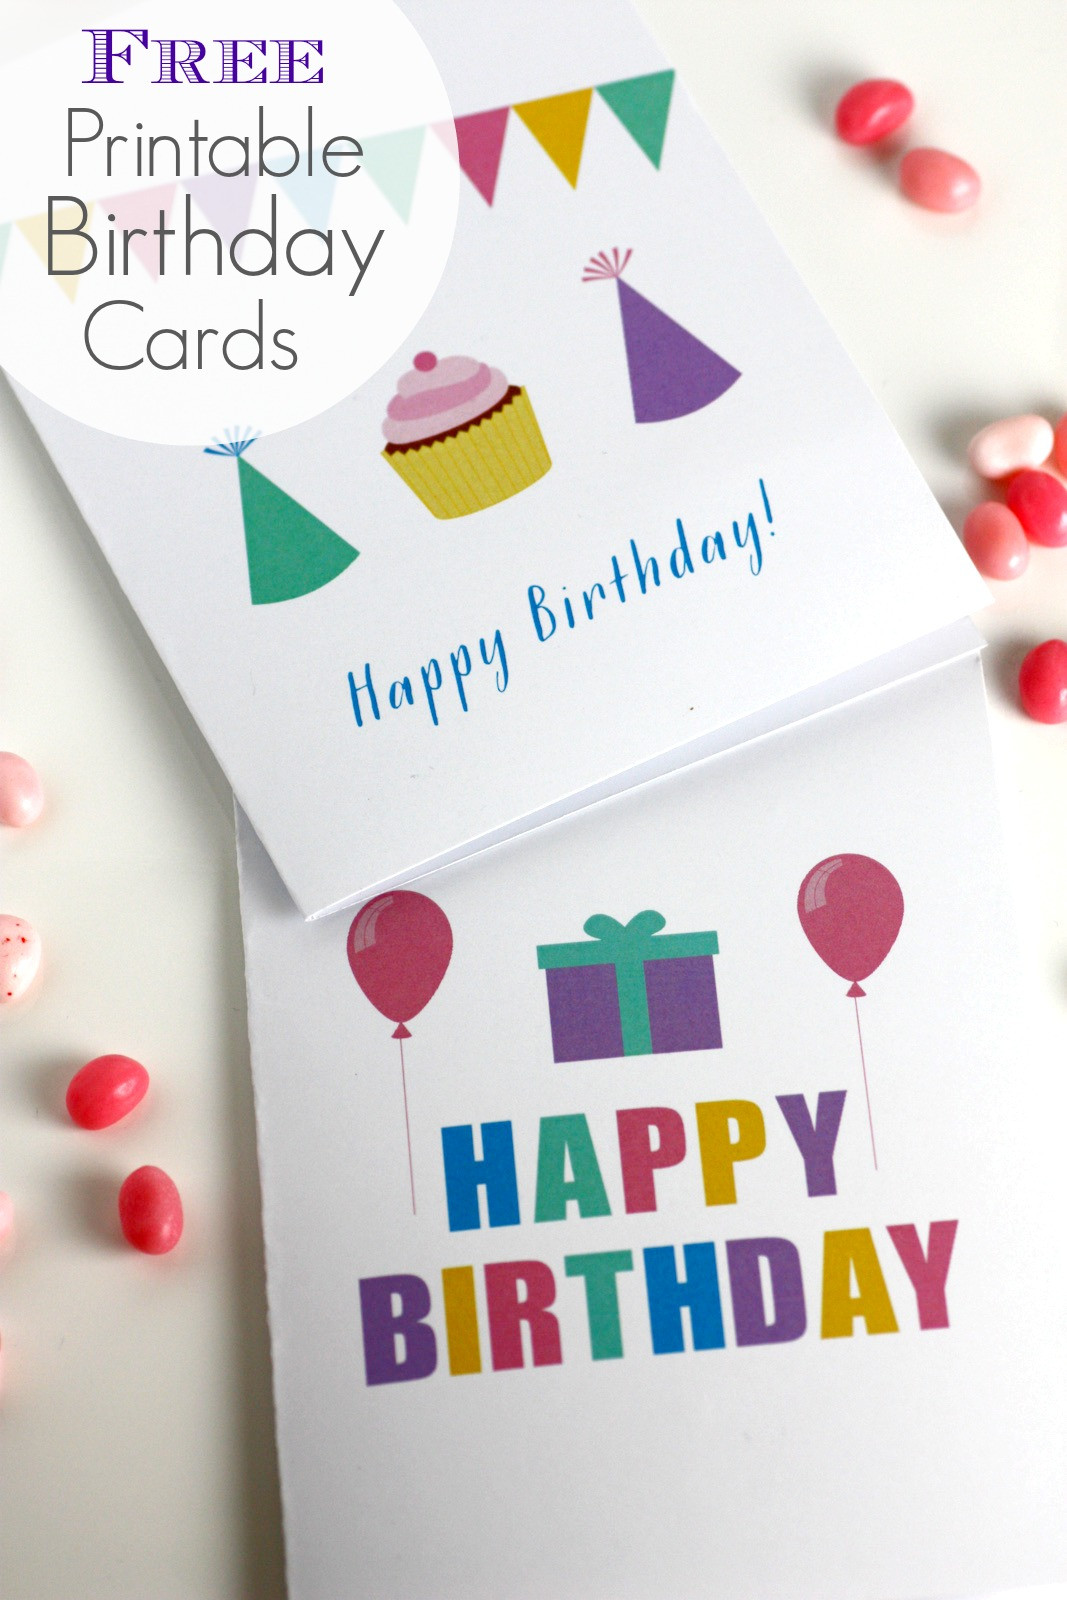 Happy Birthday Cards To Print
 Free Printable Blank Birthday Cards